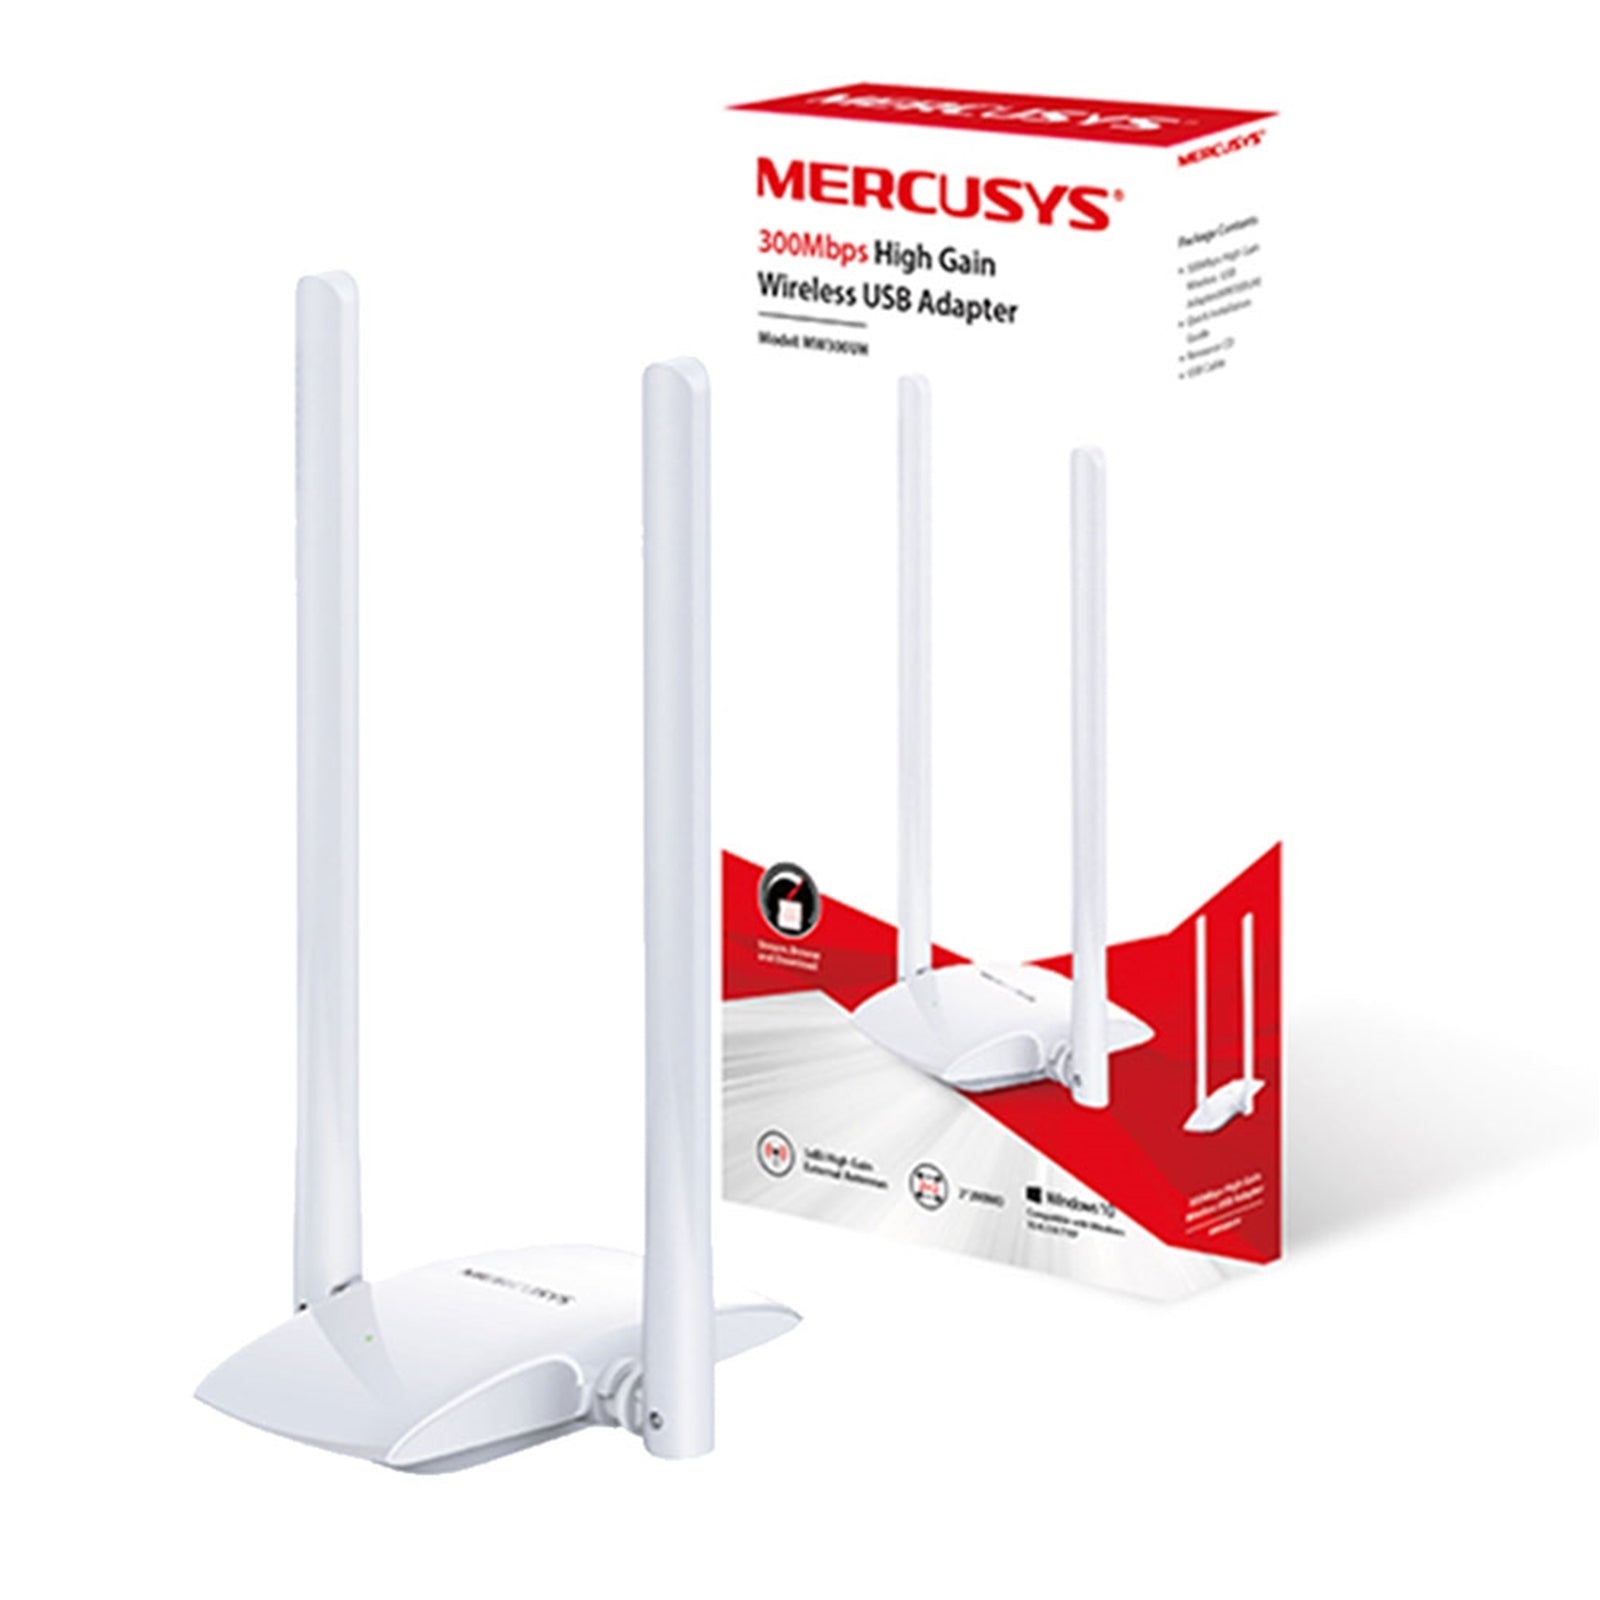 Mercusys MW300UH N300 High Gain Wireless USB Adapter